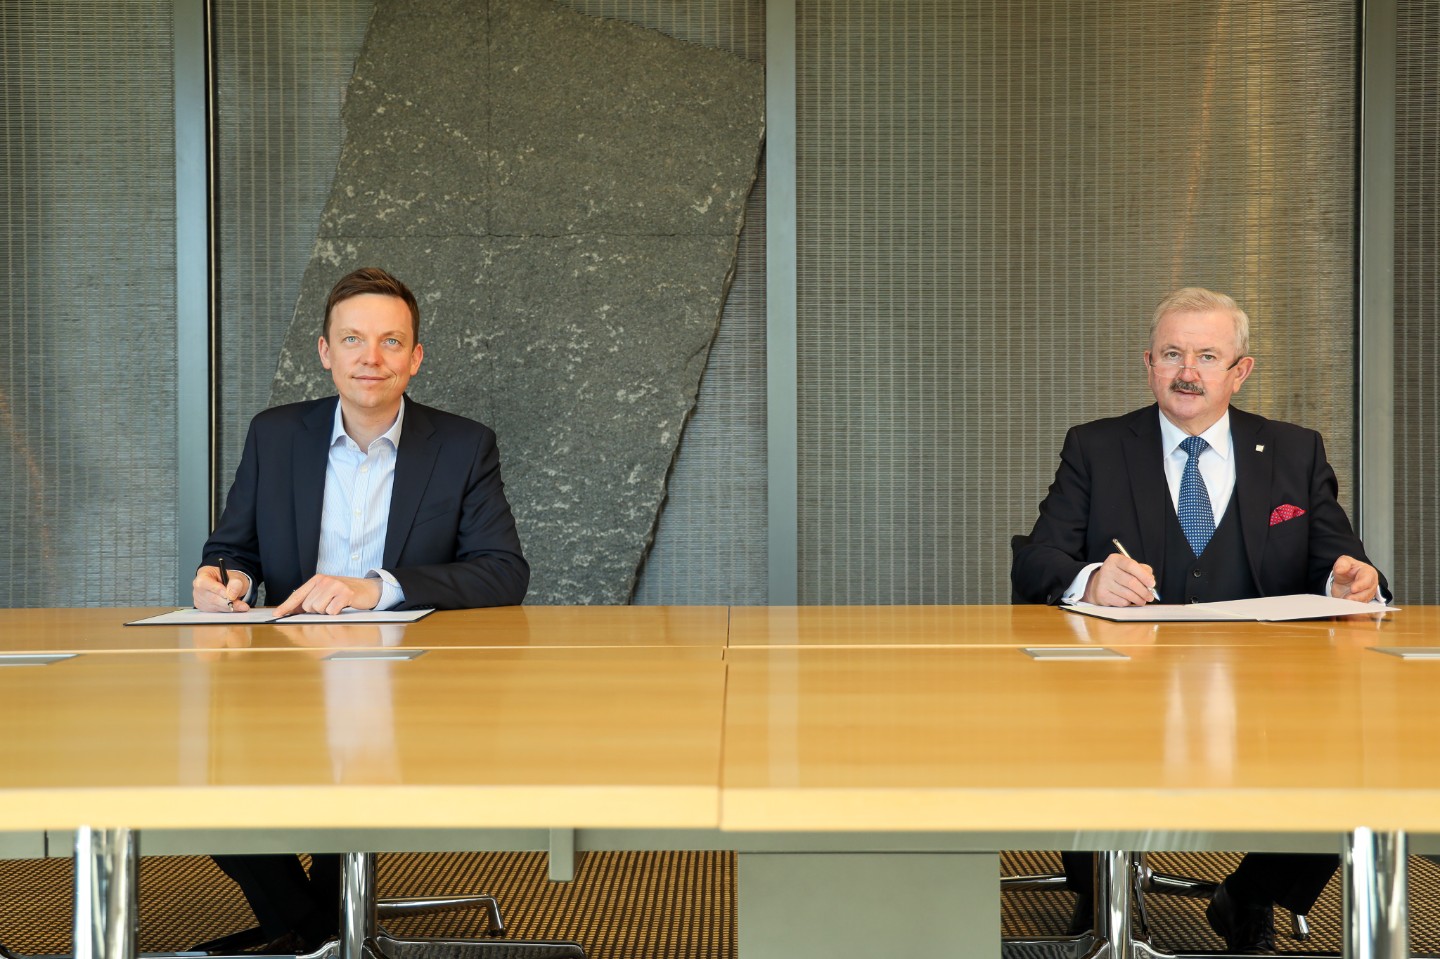 Saarland’s Minister President Tobias Hans and the President of the Fraunhofer-Gesellschaft, Prof. Reimund Neugebauer, signed an agreement today to establish the Fraunhofer Center for Sensor Intelligence.